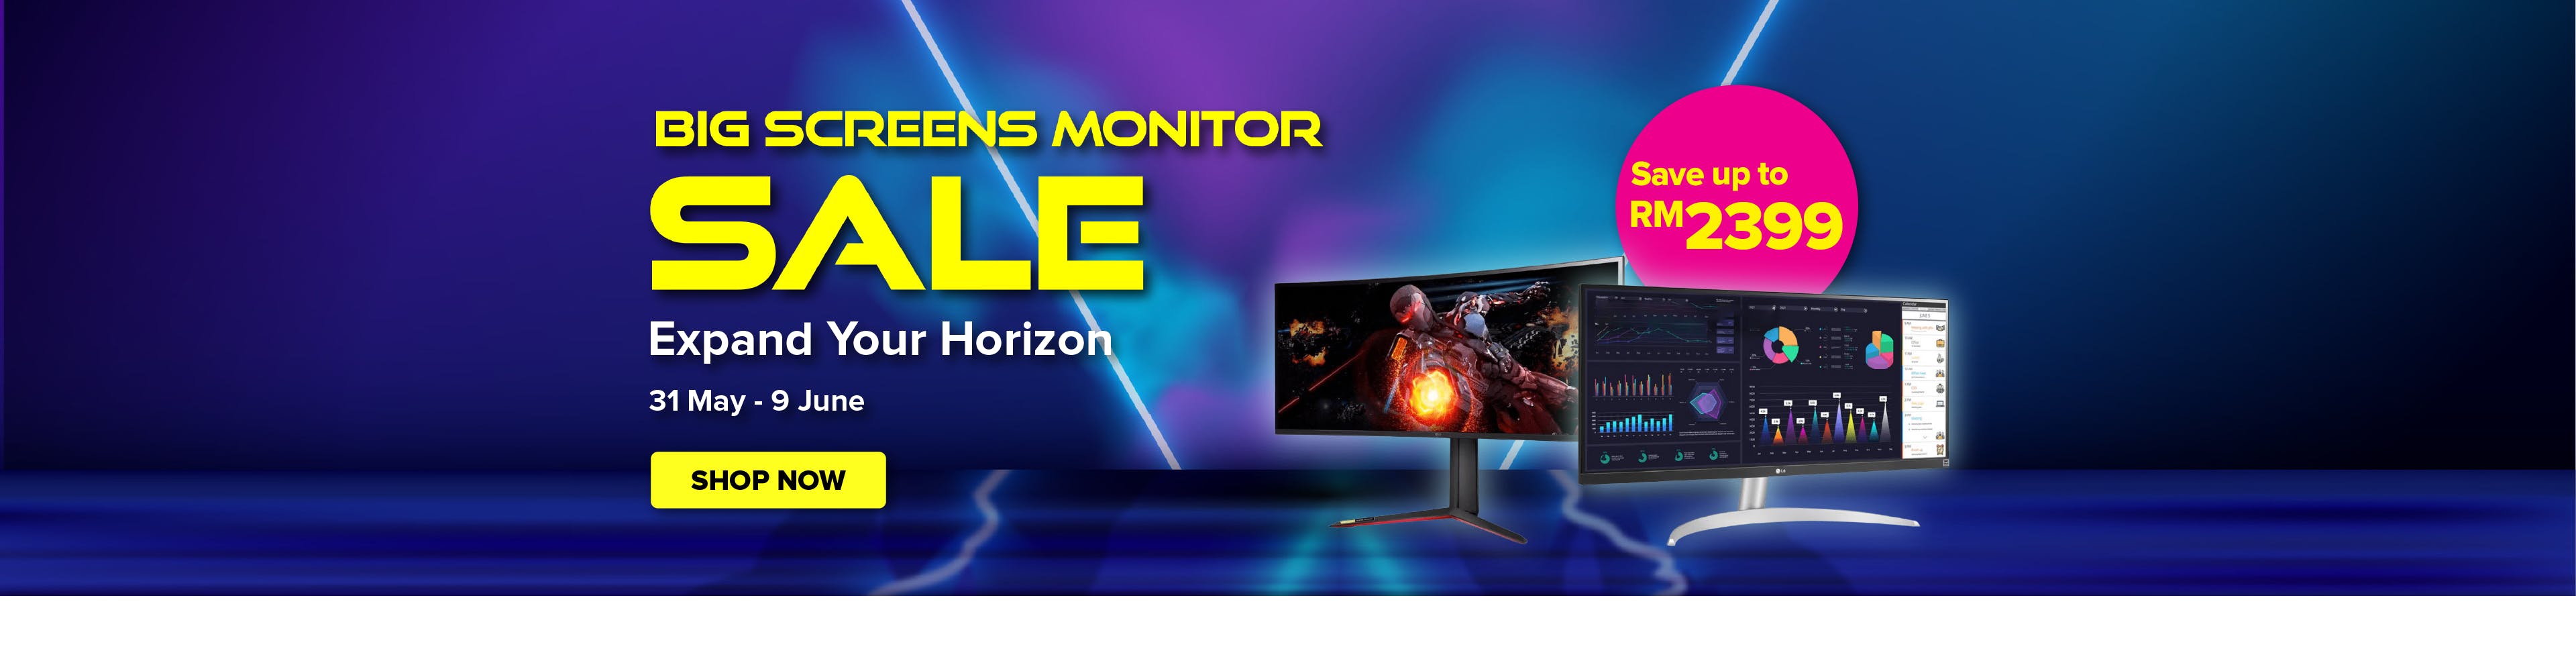 Big Screens Monitor Sale